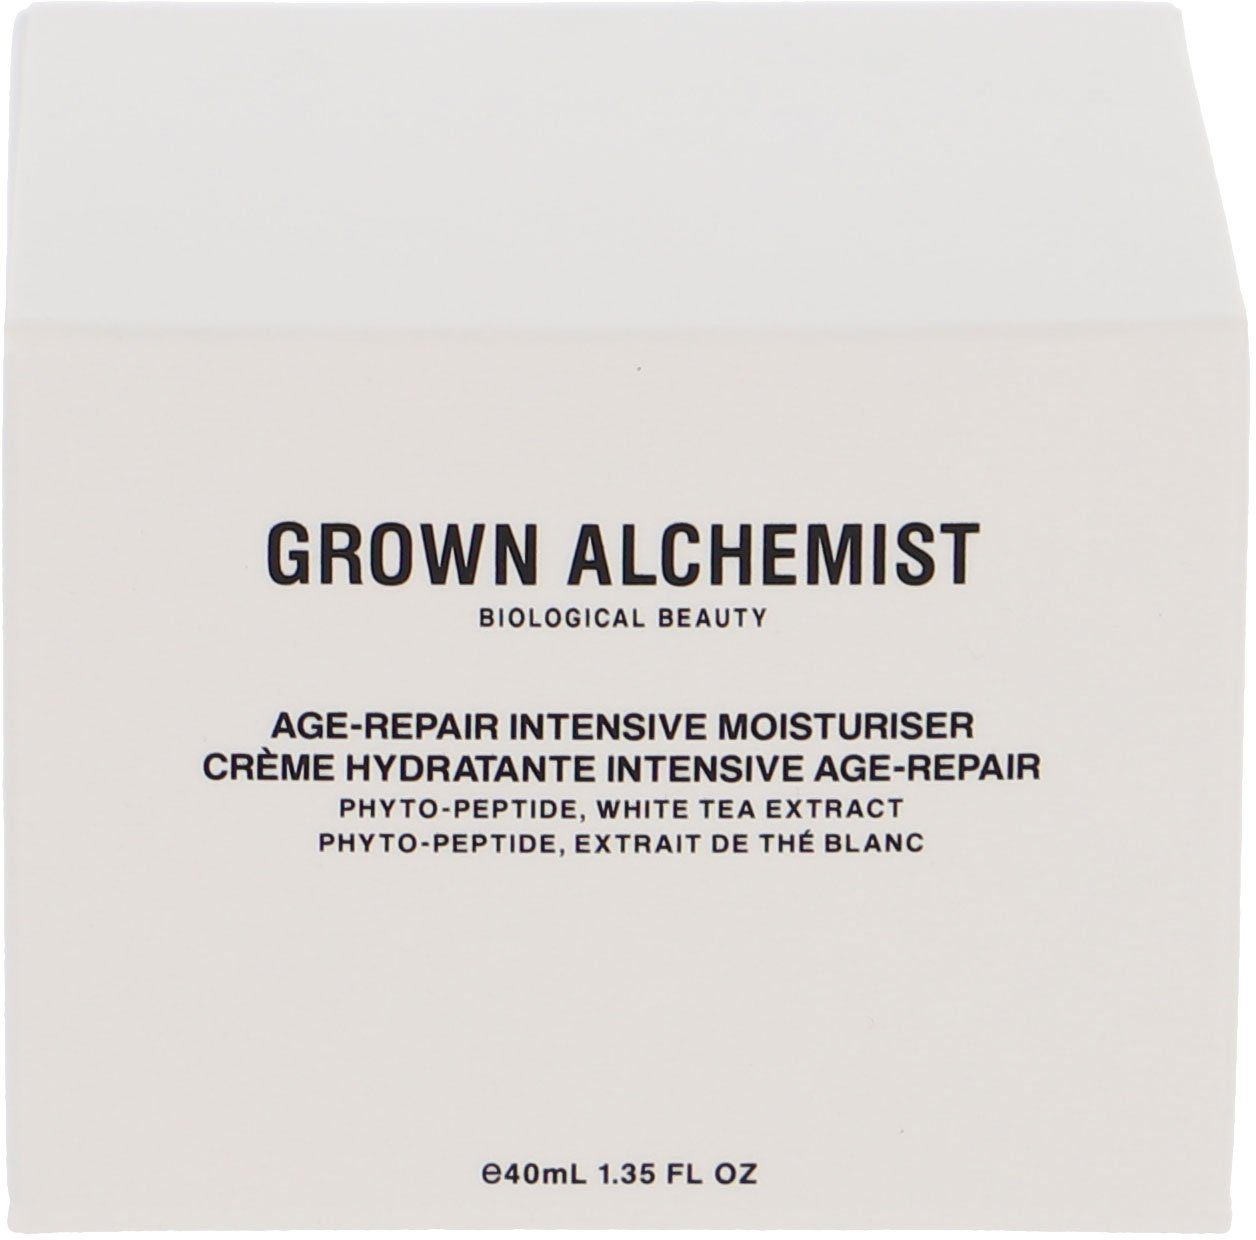 Extract, Anti-Aging-Creme GROWN Moisturiser, Phyto-Peptide Tea Intensive White ALCHEMIST Age-Repair